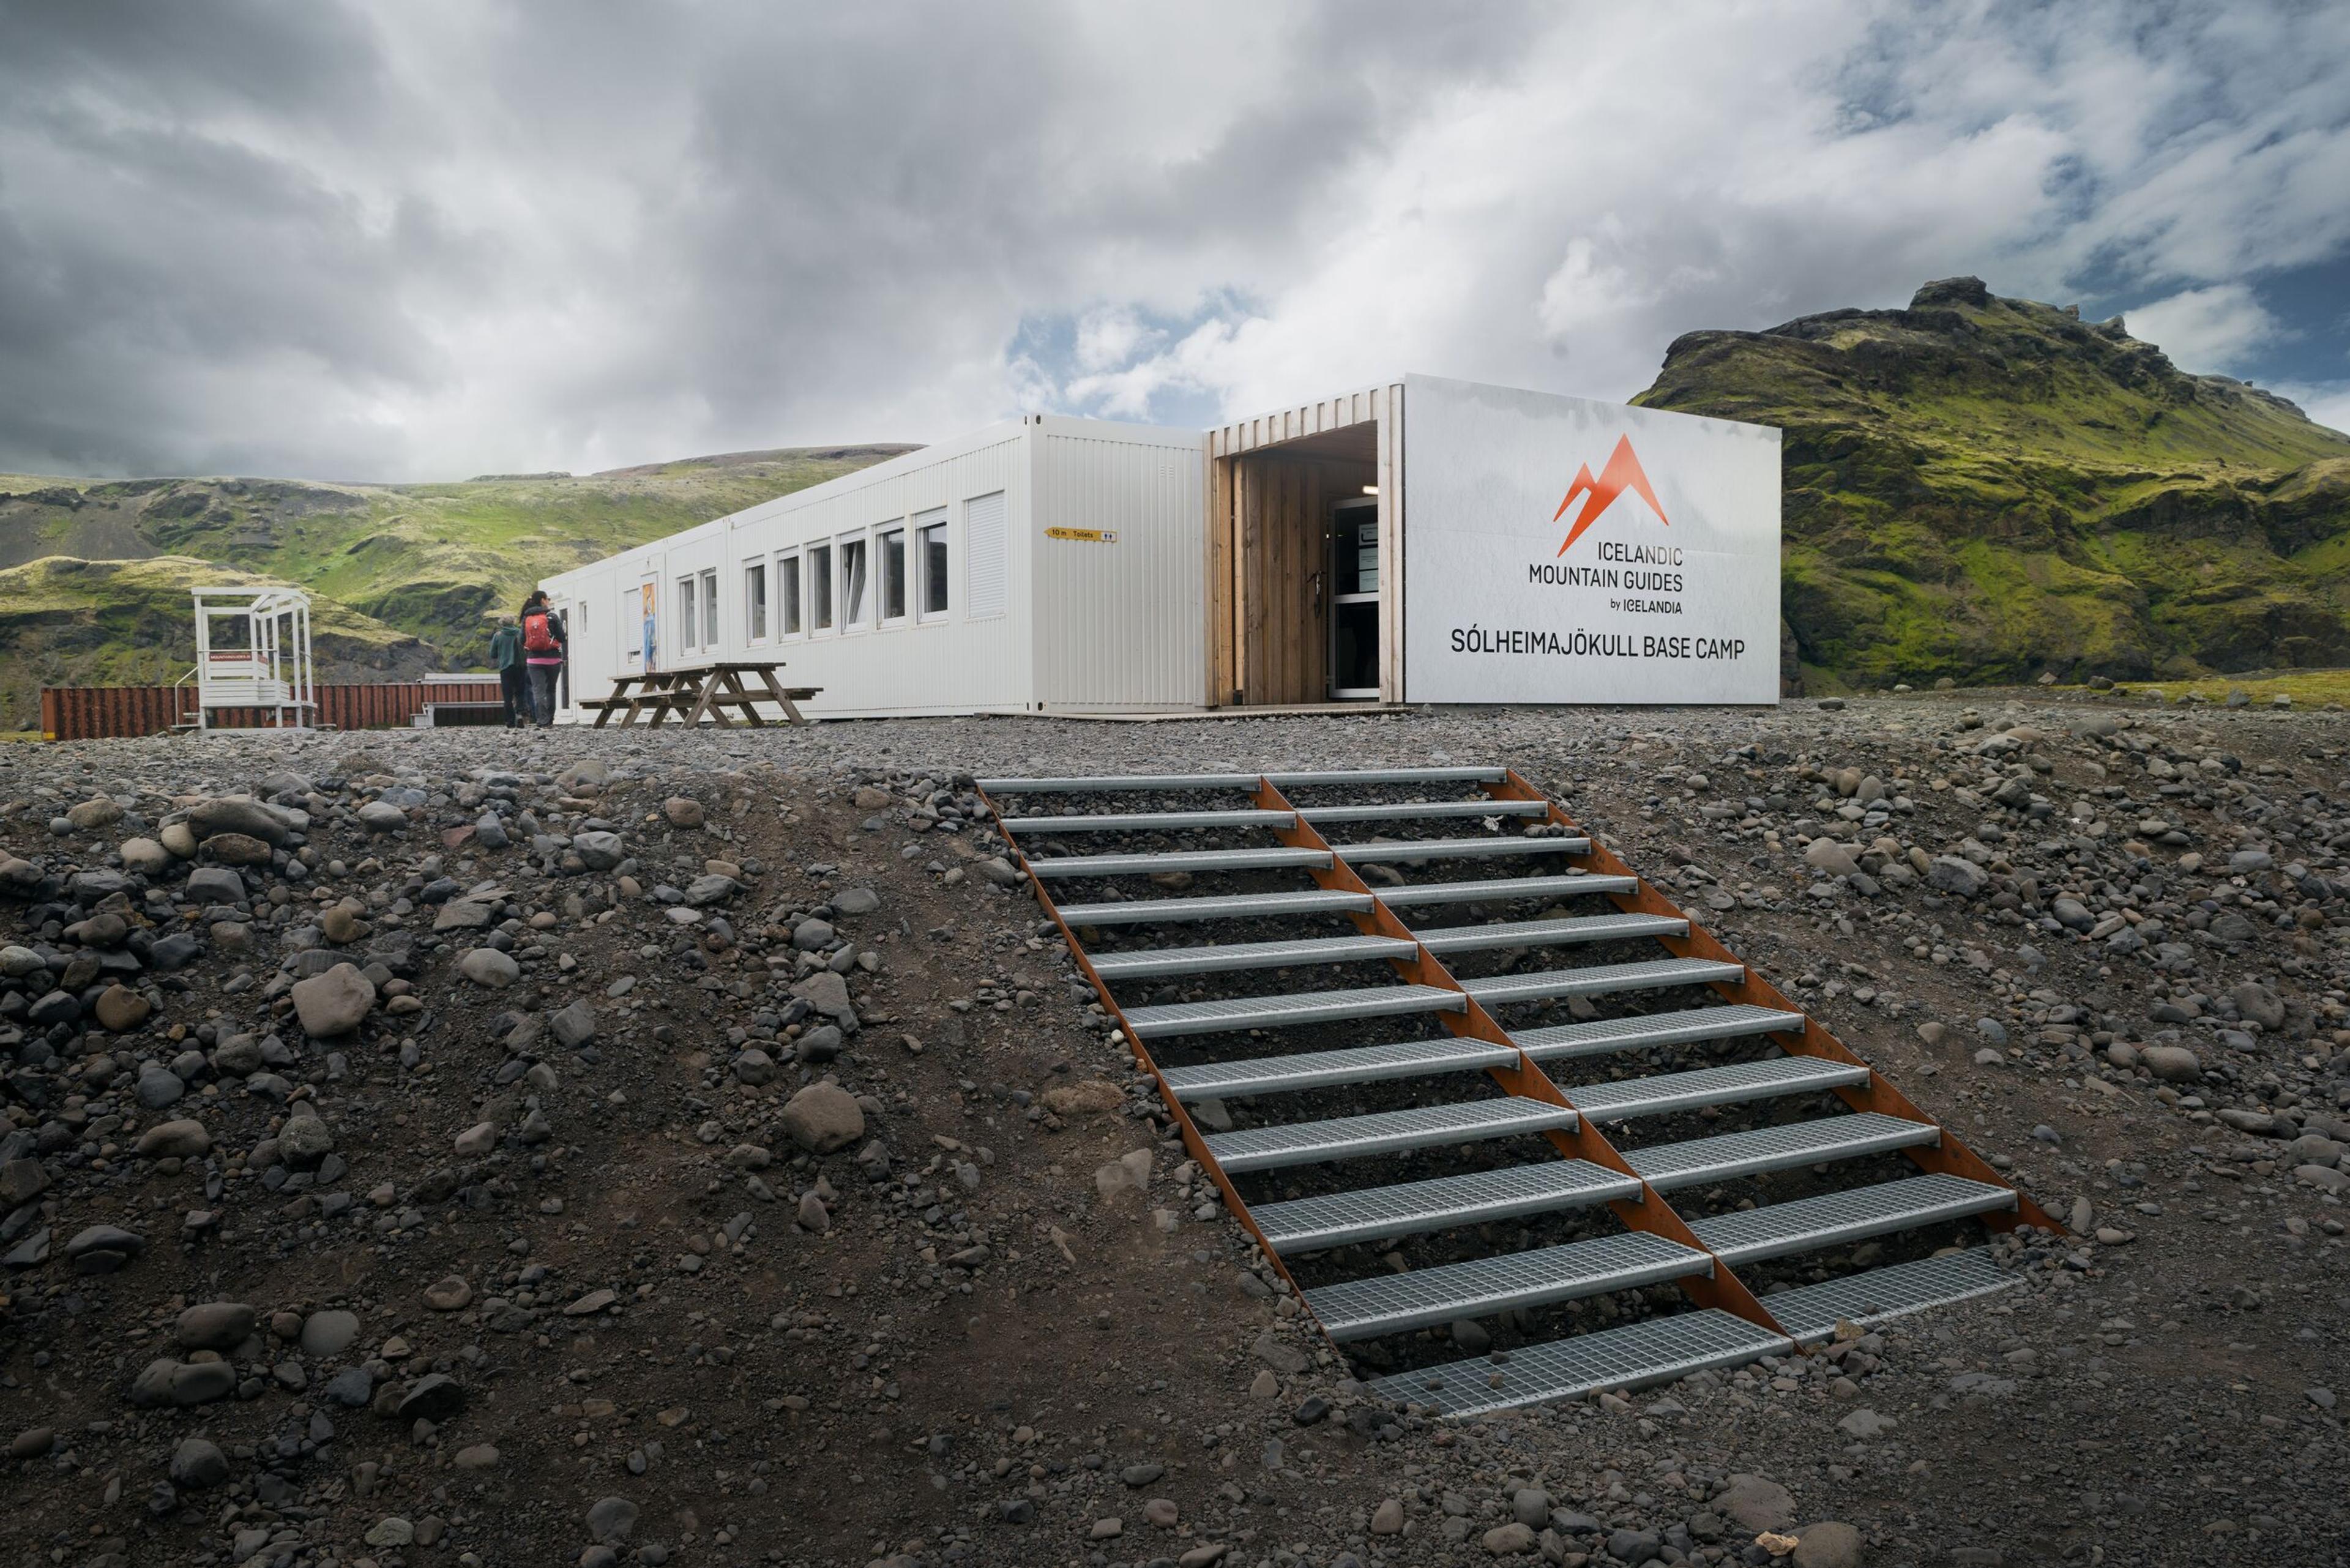 Sólheimajökull Basecamp: Rocky Terrain, Backdrop of Mountains, and Distinctive White Base